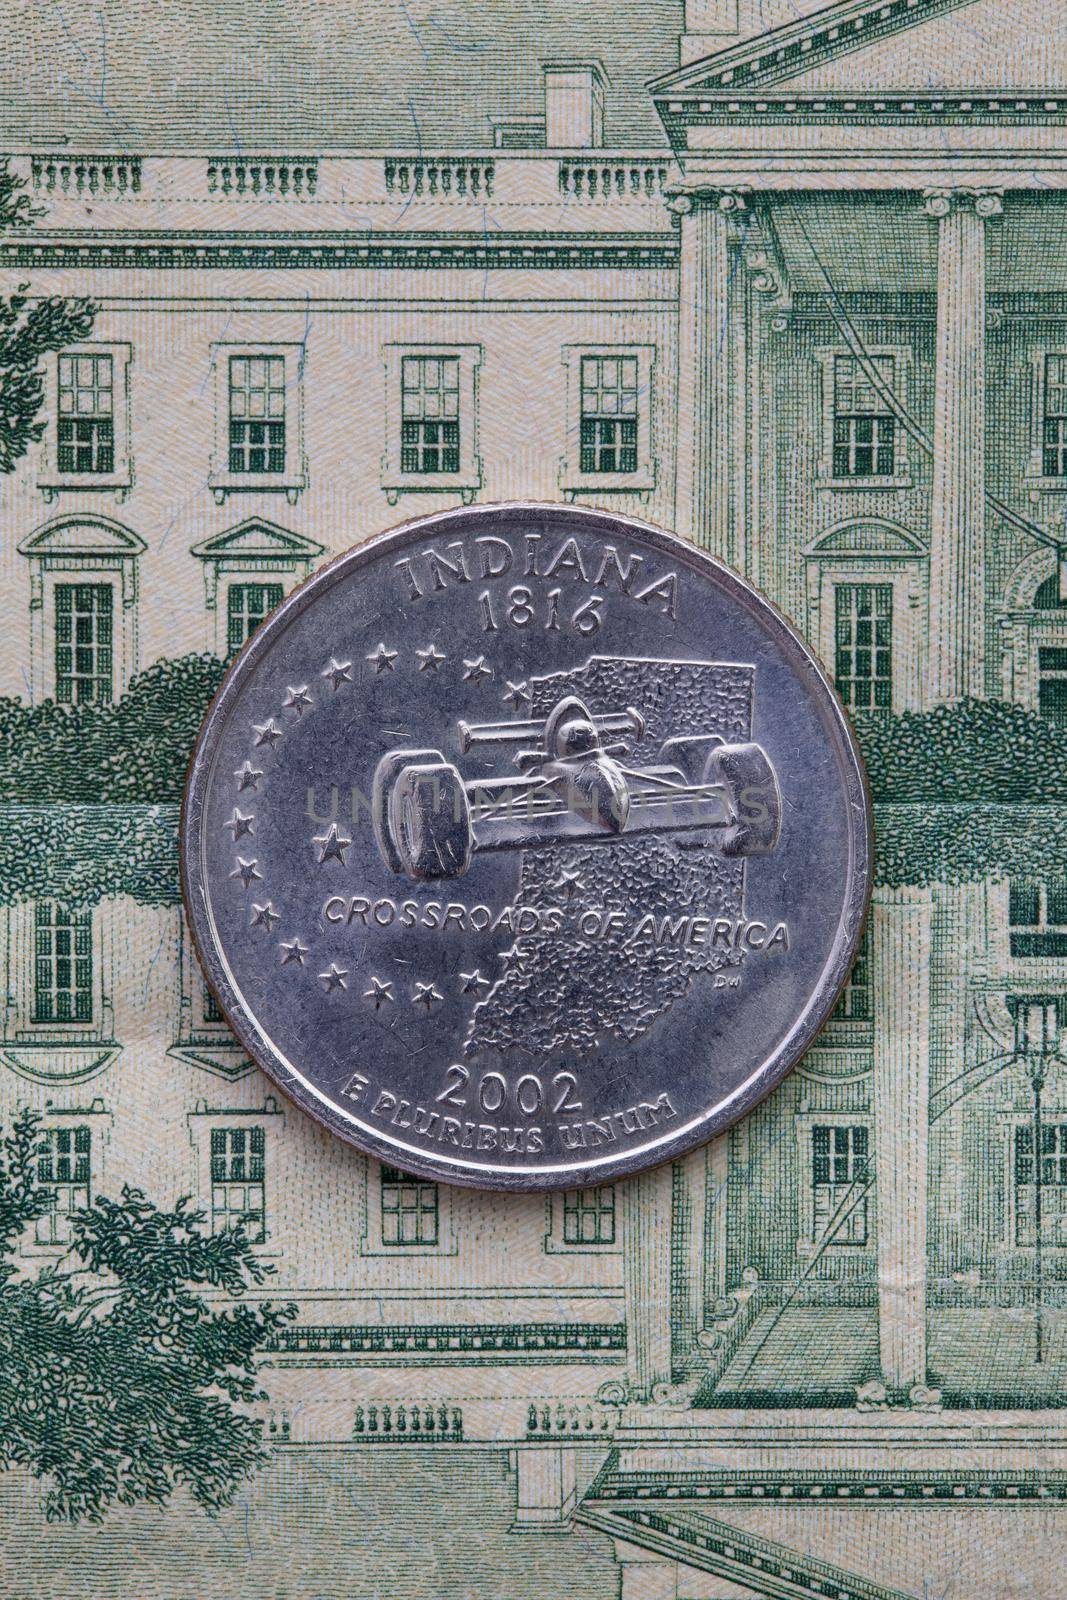 A quarter of Indiana on US dollar bills. Symmetric composition of US dollar bills and a quarter of Indiana